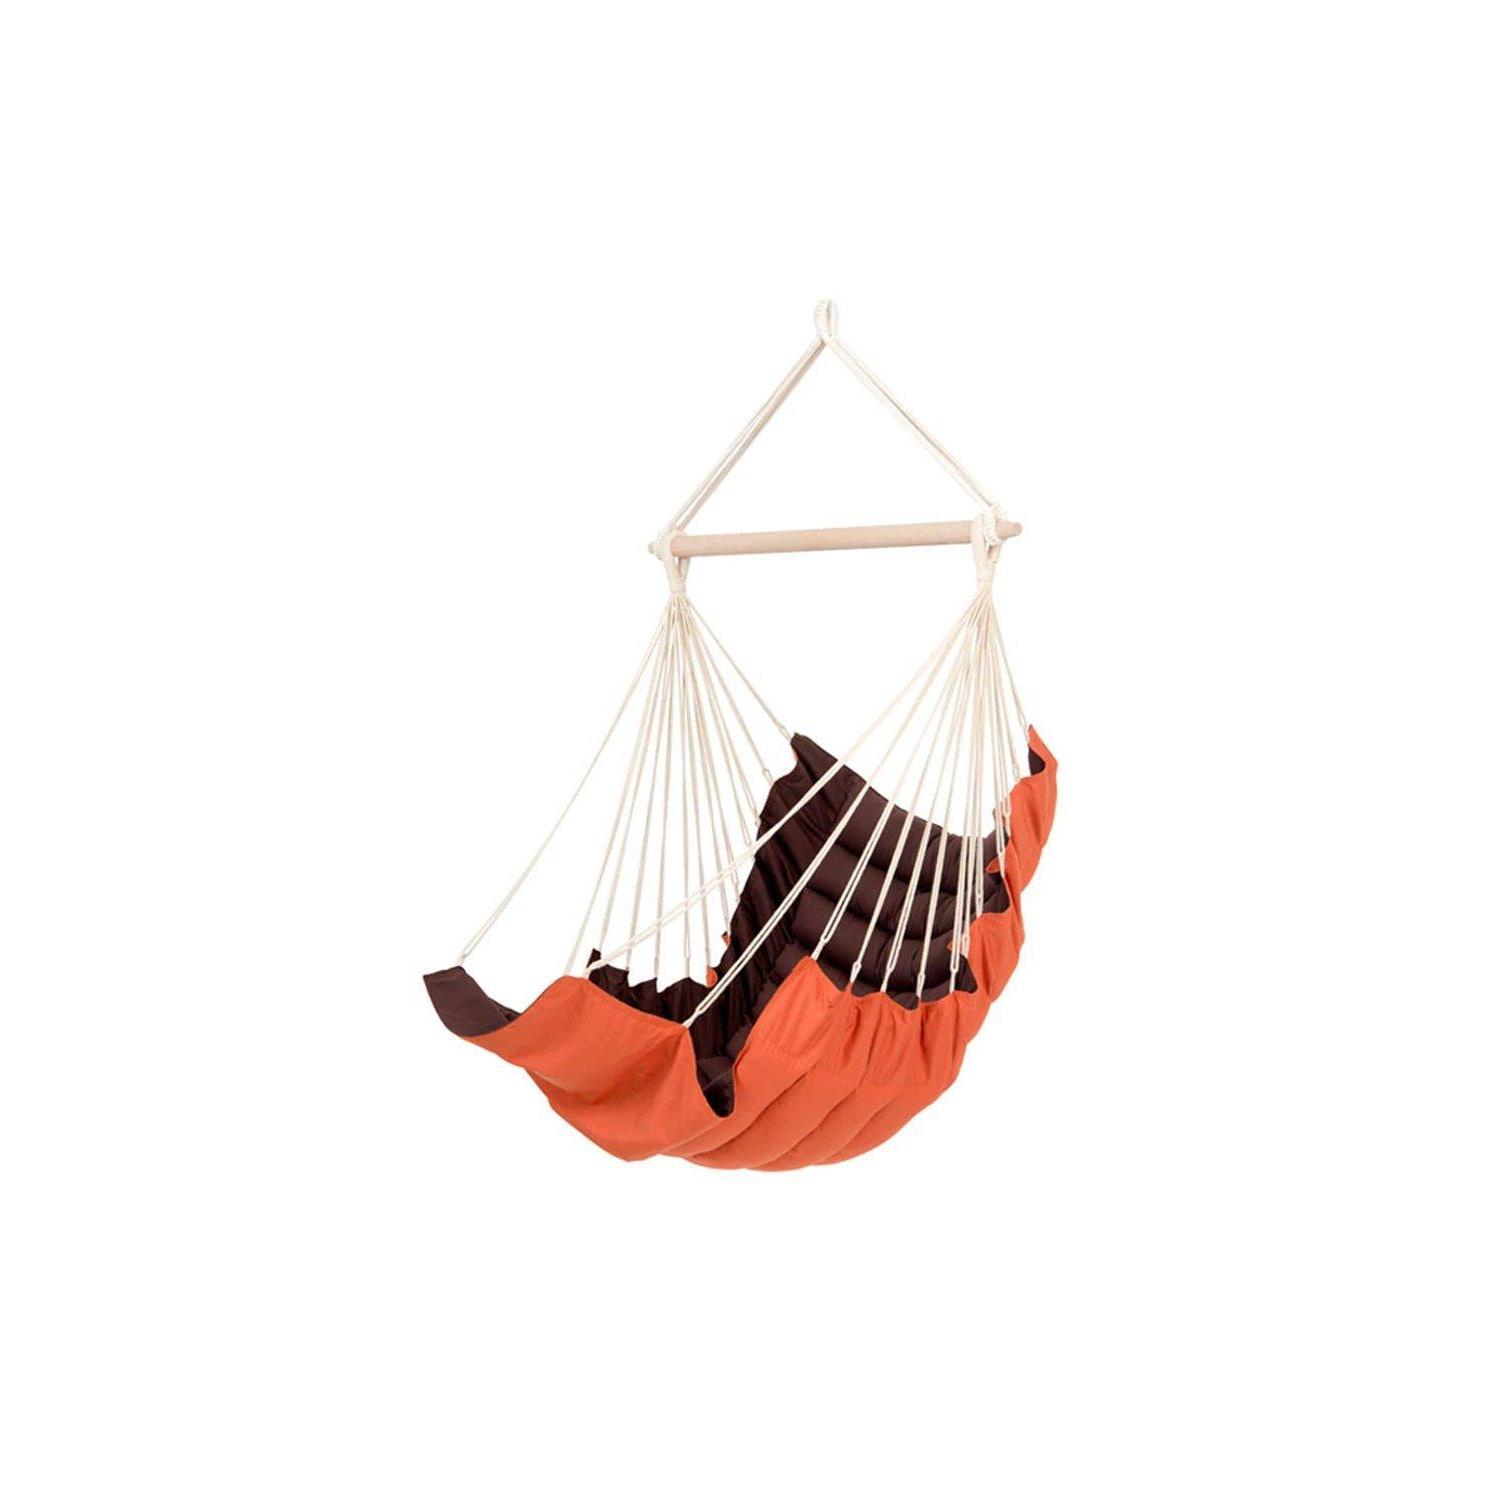 Amazonas California Hanging Hammock Chair - Terracotta - image 1